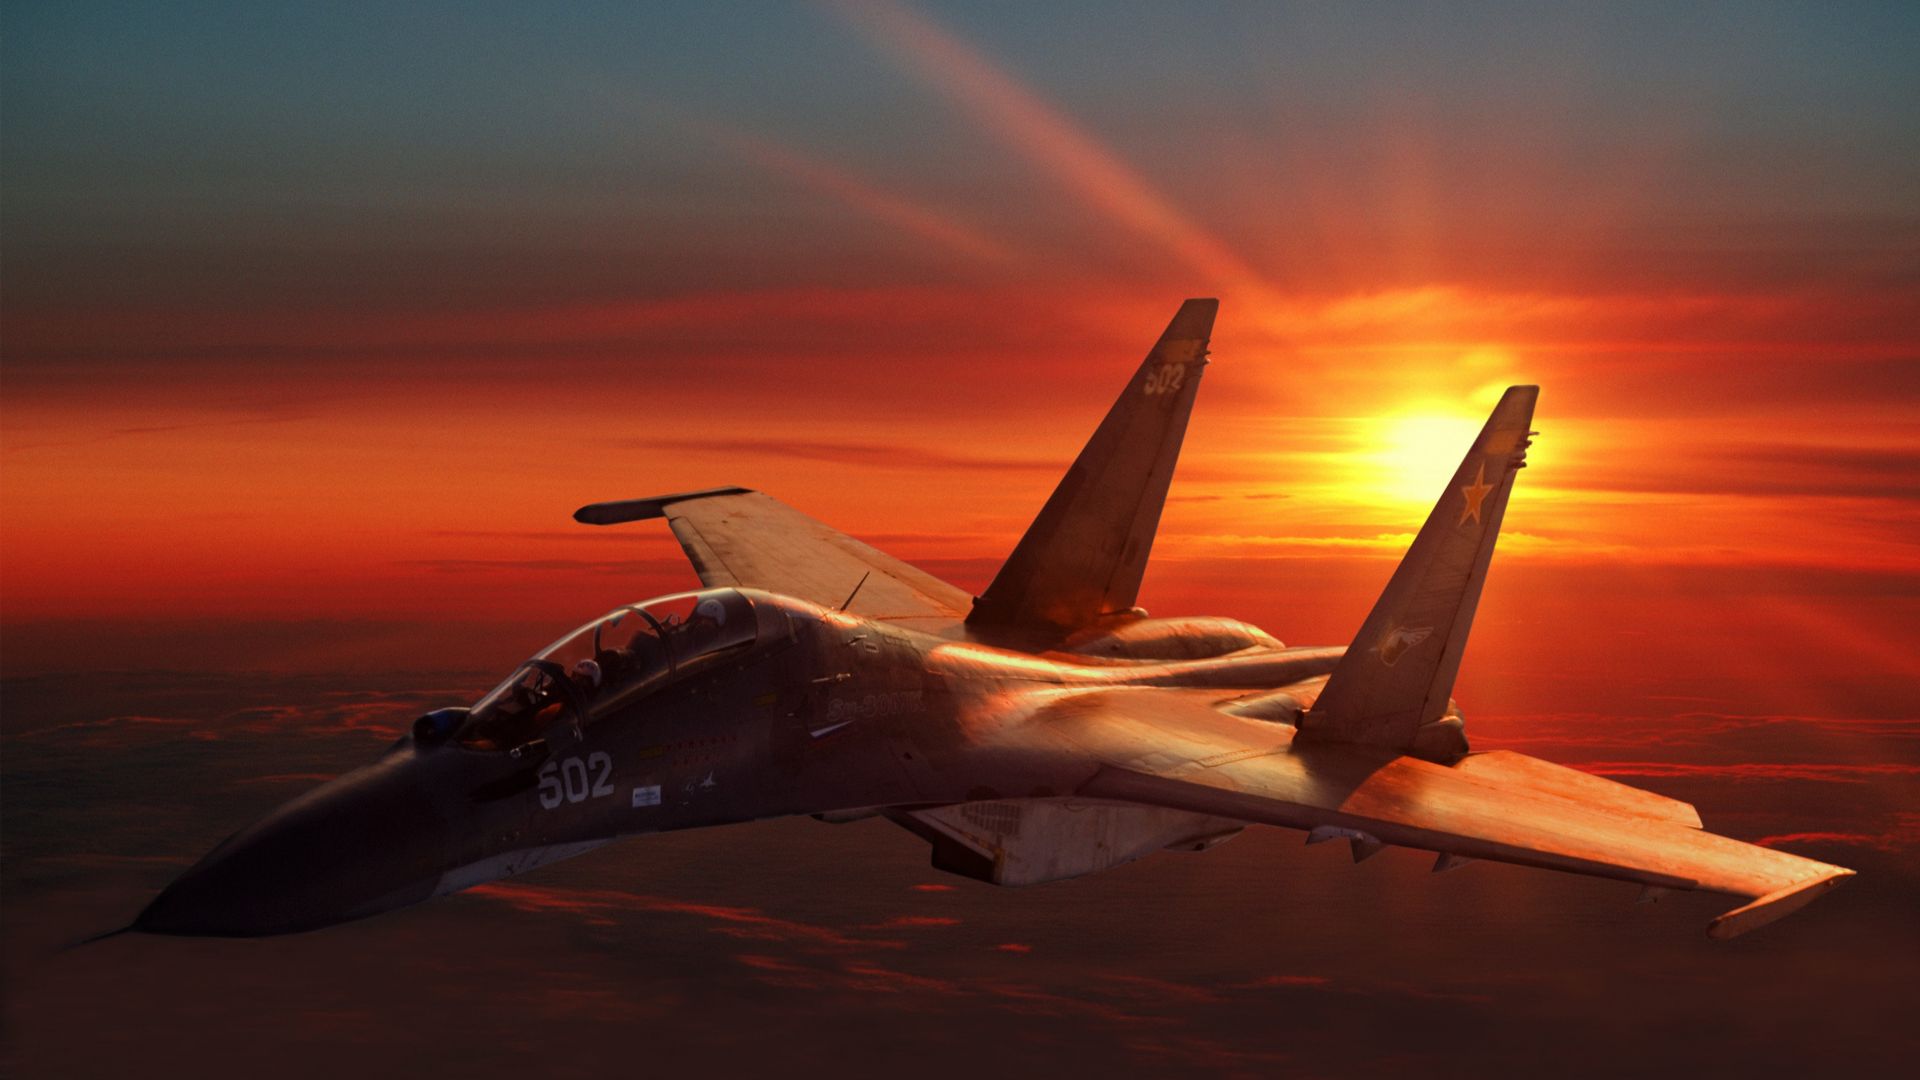 Sukhoi Su-30, fighter aircraft, sunset (horizontal)